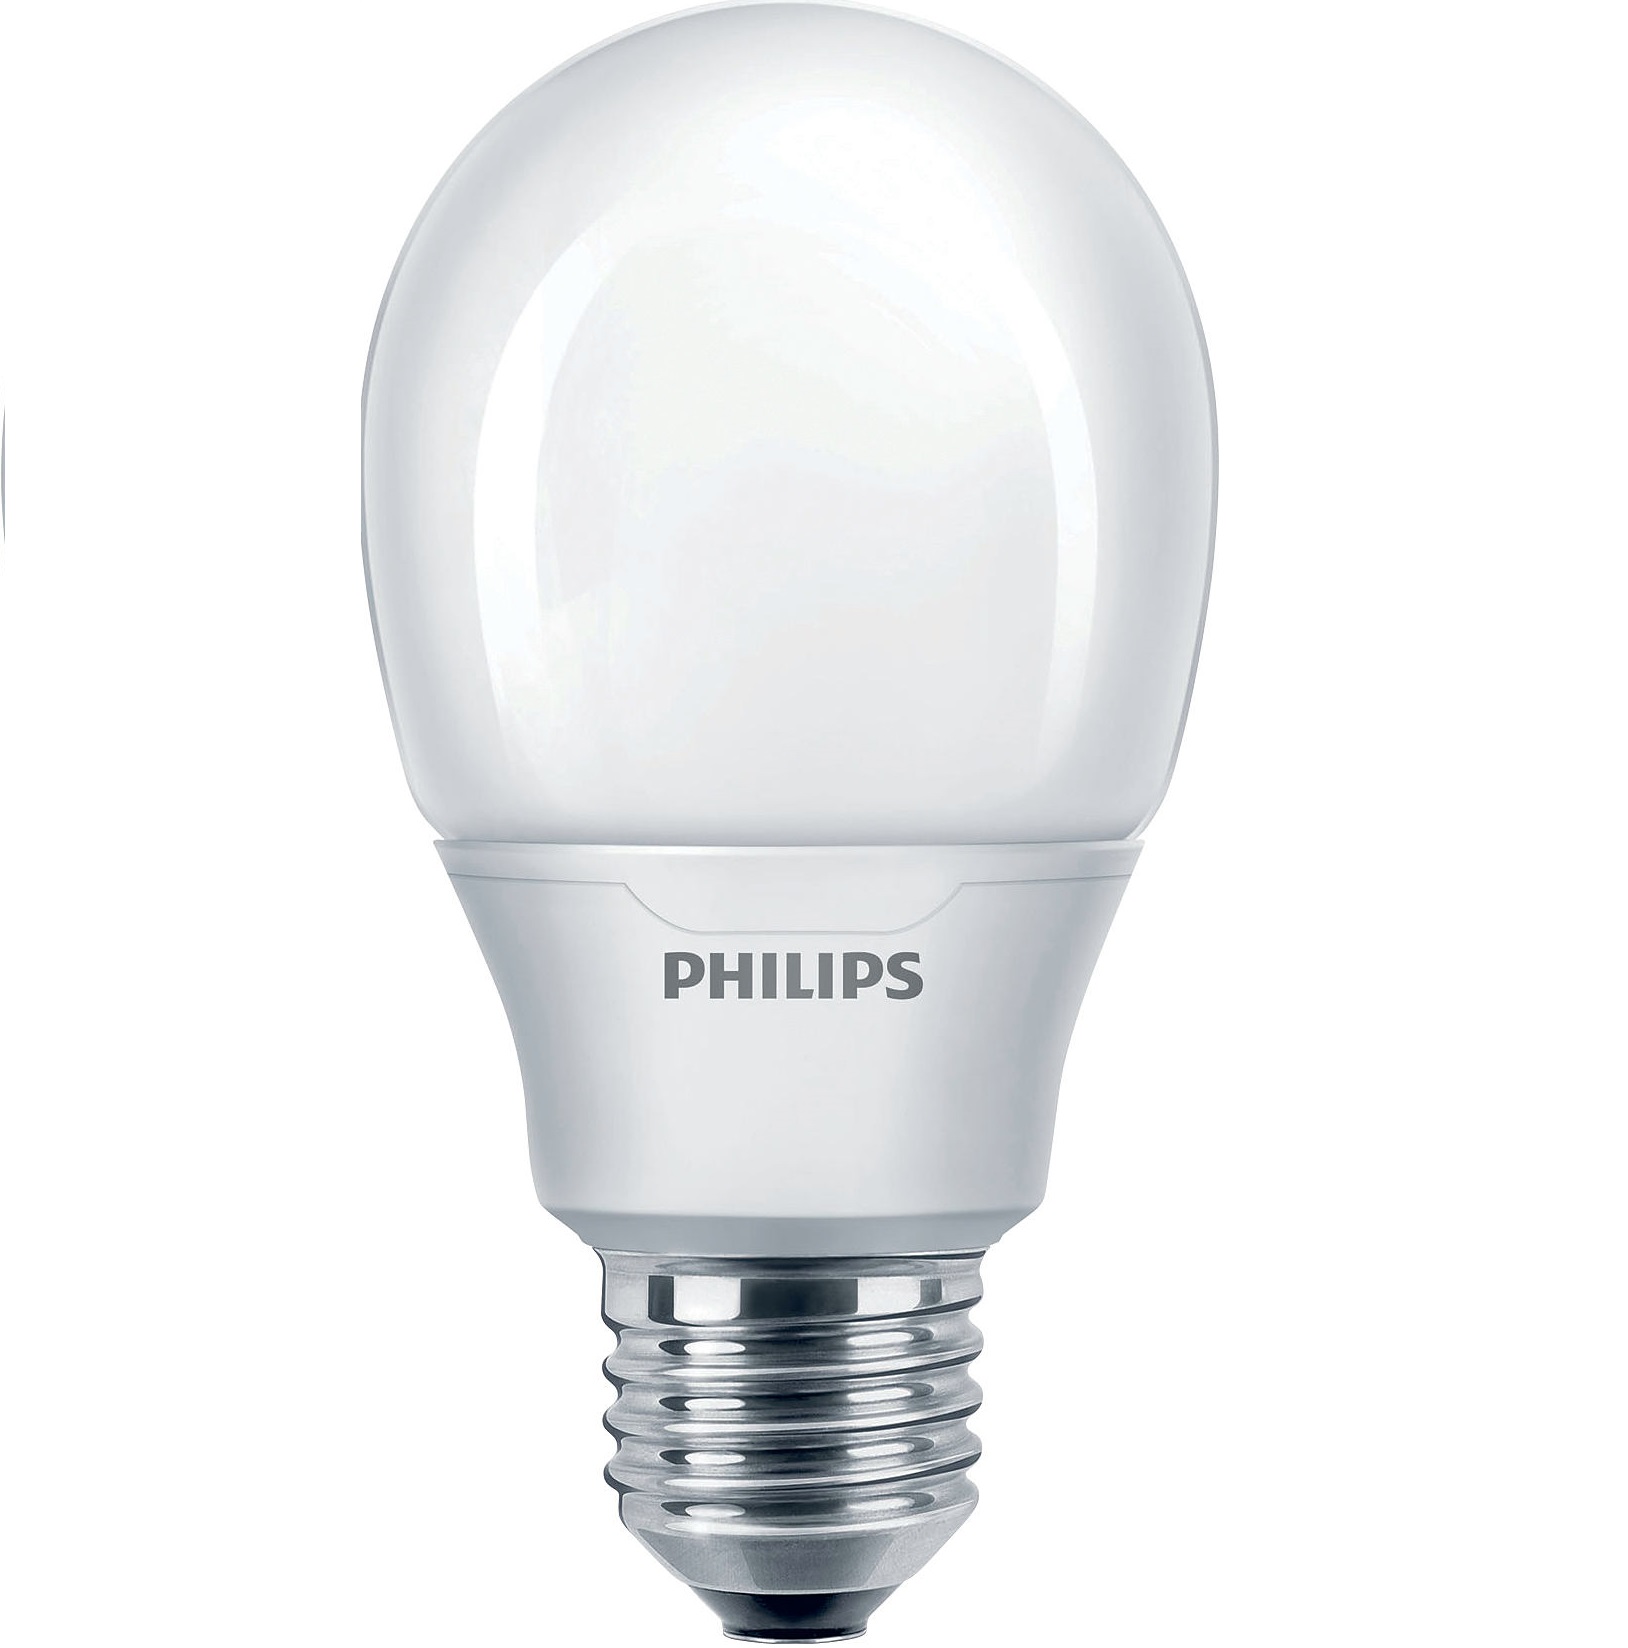 Лампа компактная люминесцентная с внешней колбой (грушеобразная) - Philips Softone Bulb T60 15W 230V 2700K E27 530lm - 871829168264600 фото